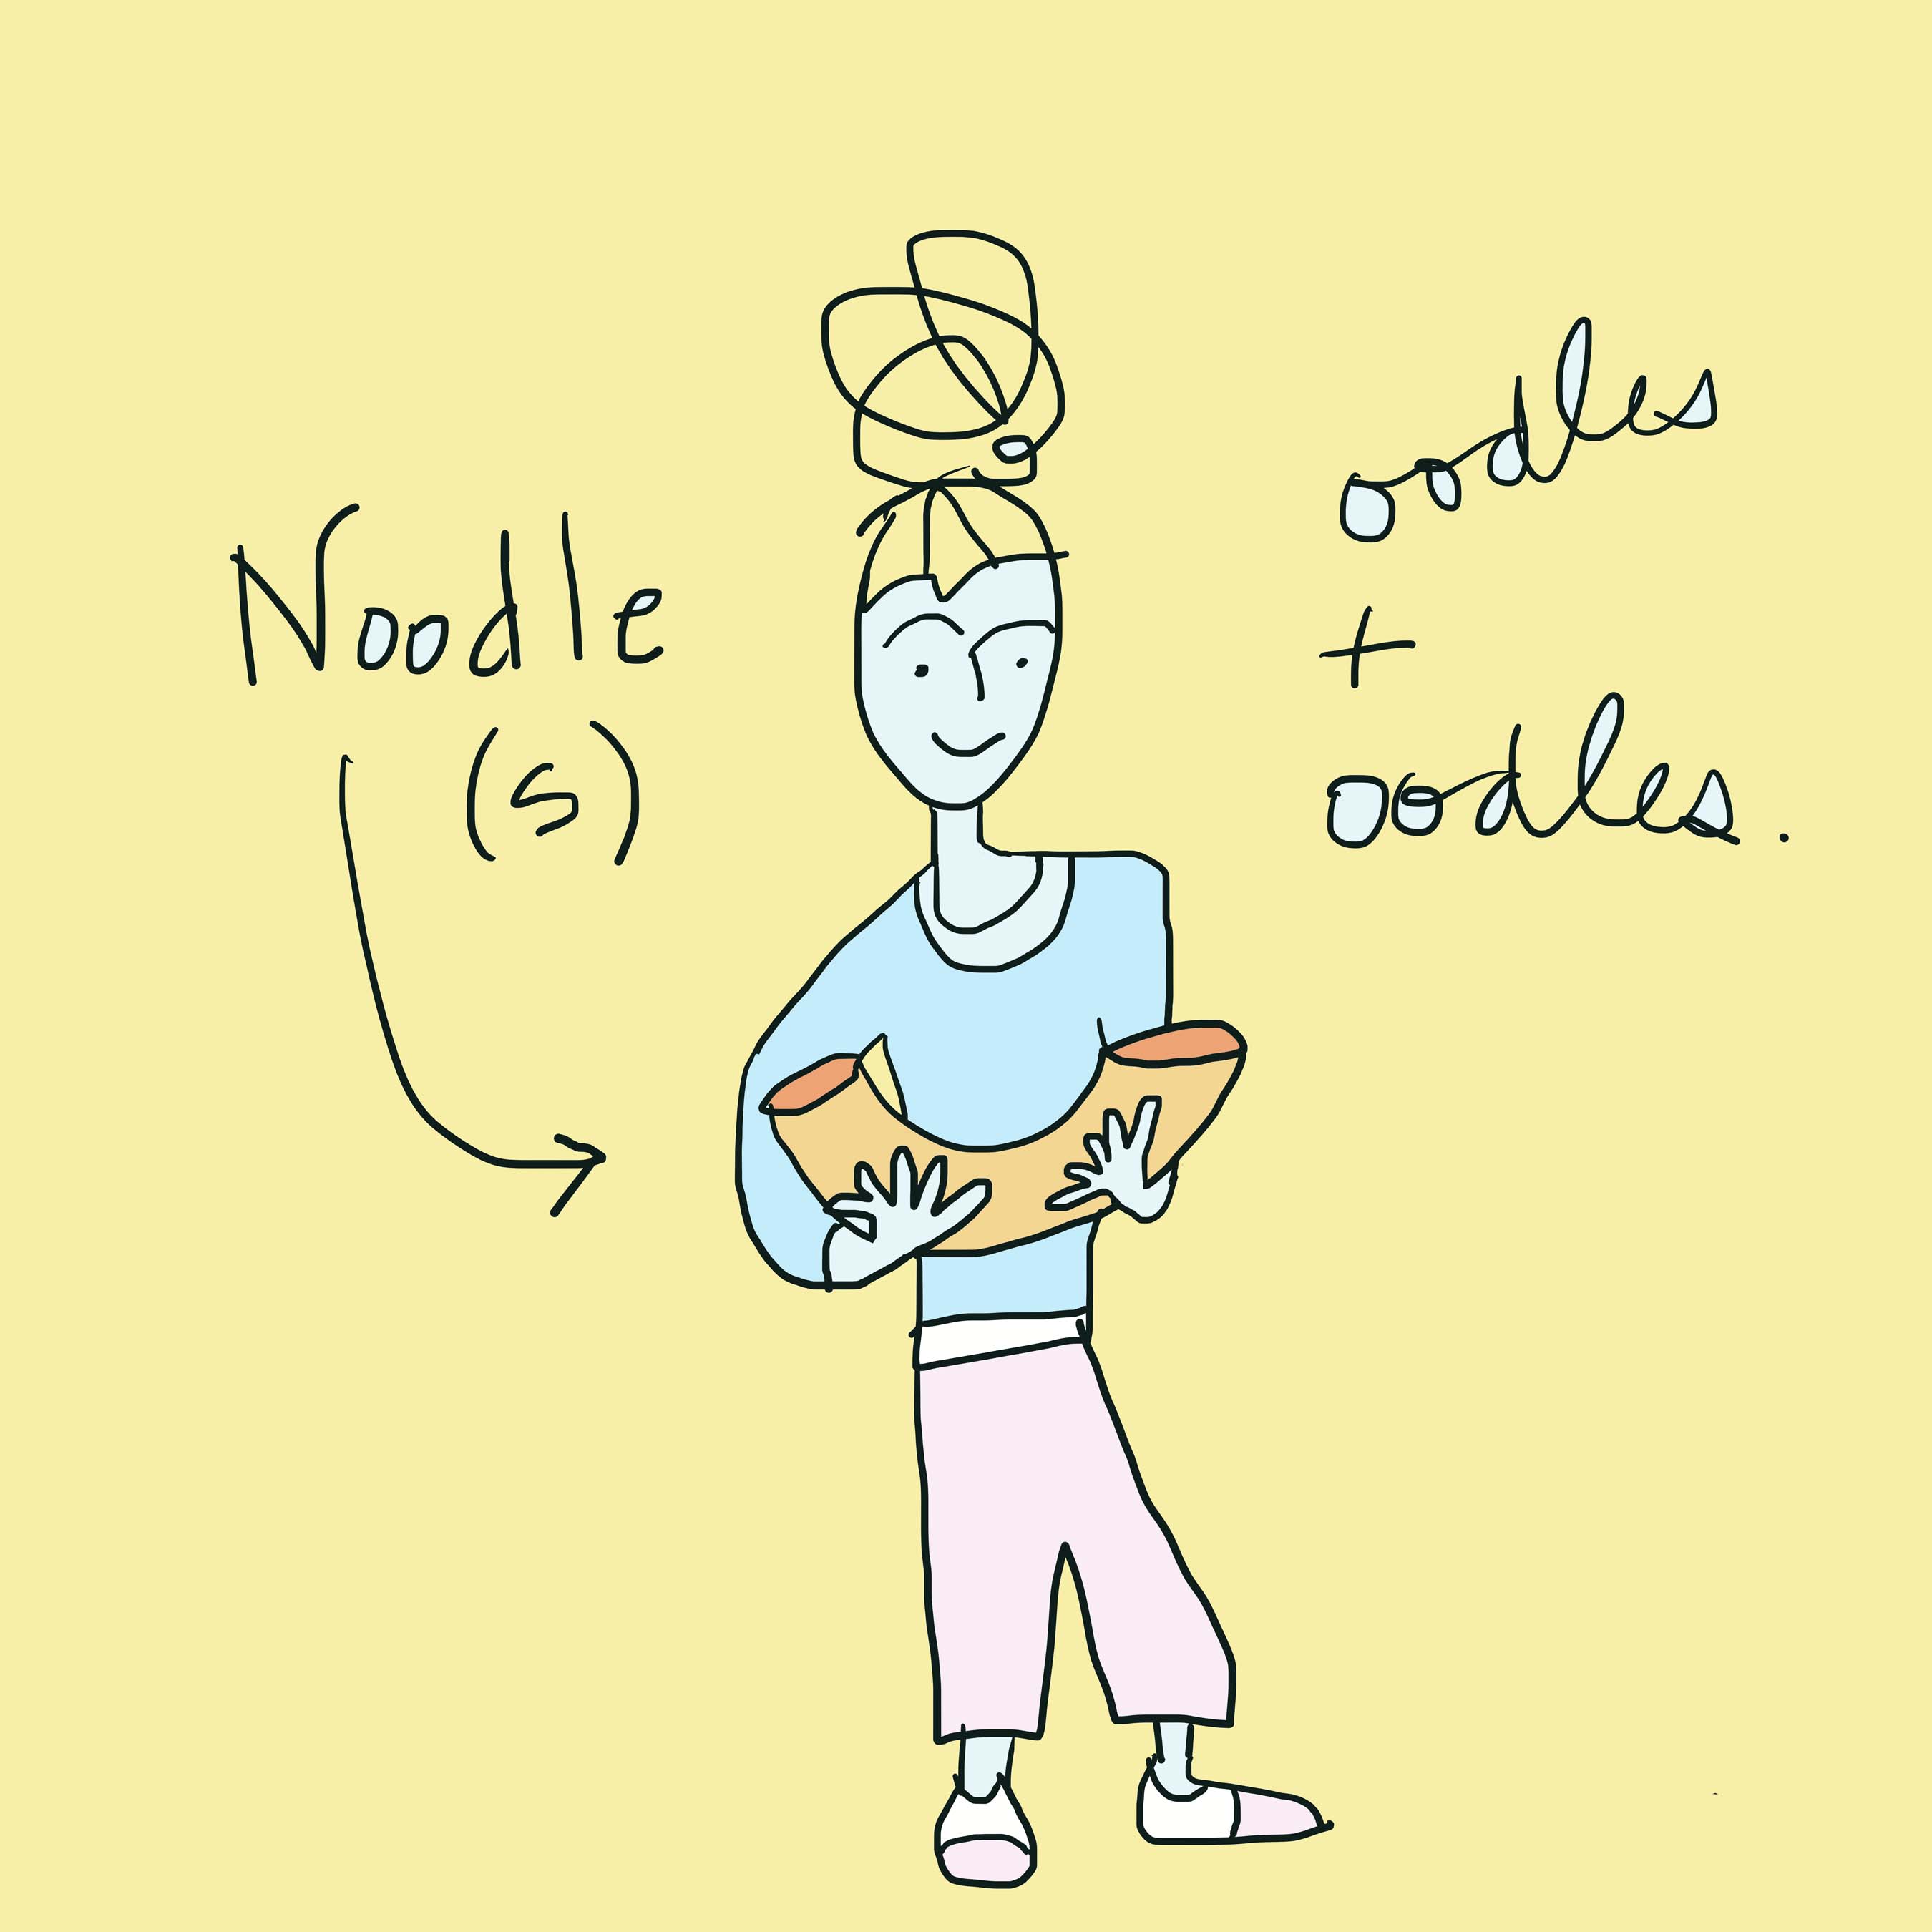 art every day number 532 / illustration / noodle